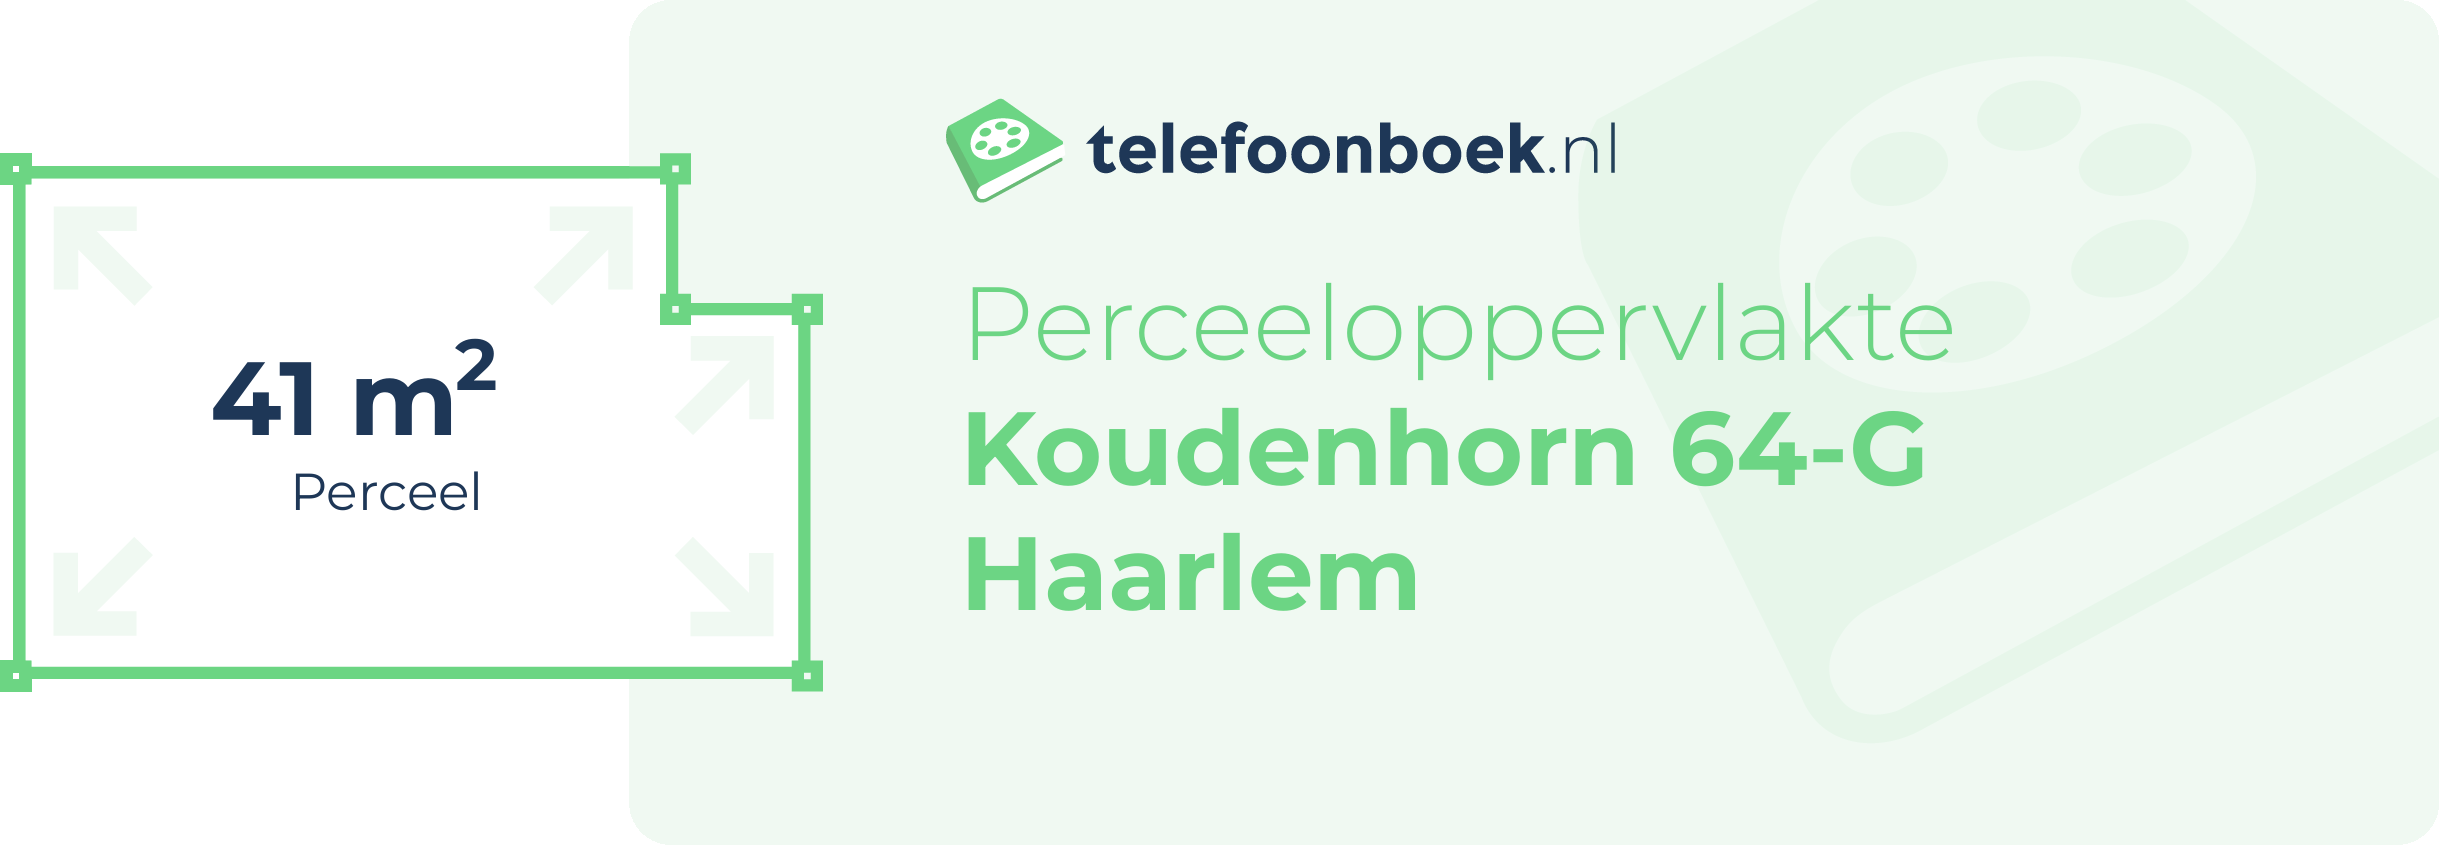 Perceeloppervlakte Koudenhorn 64-G Haarlem